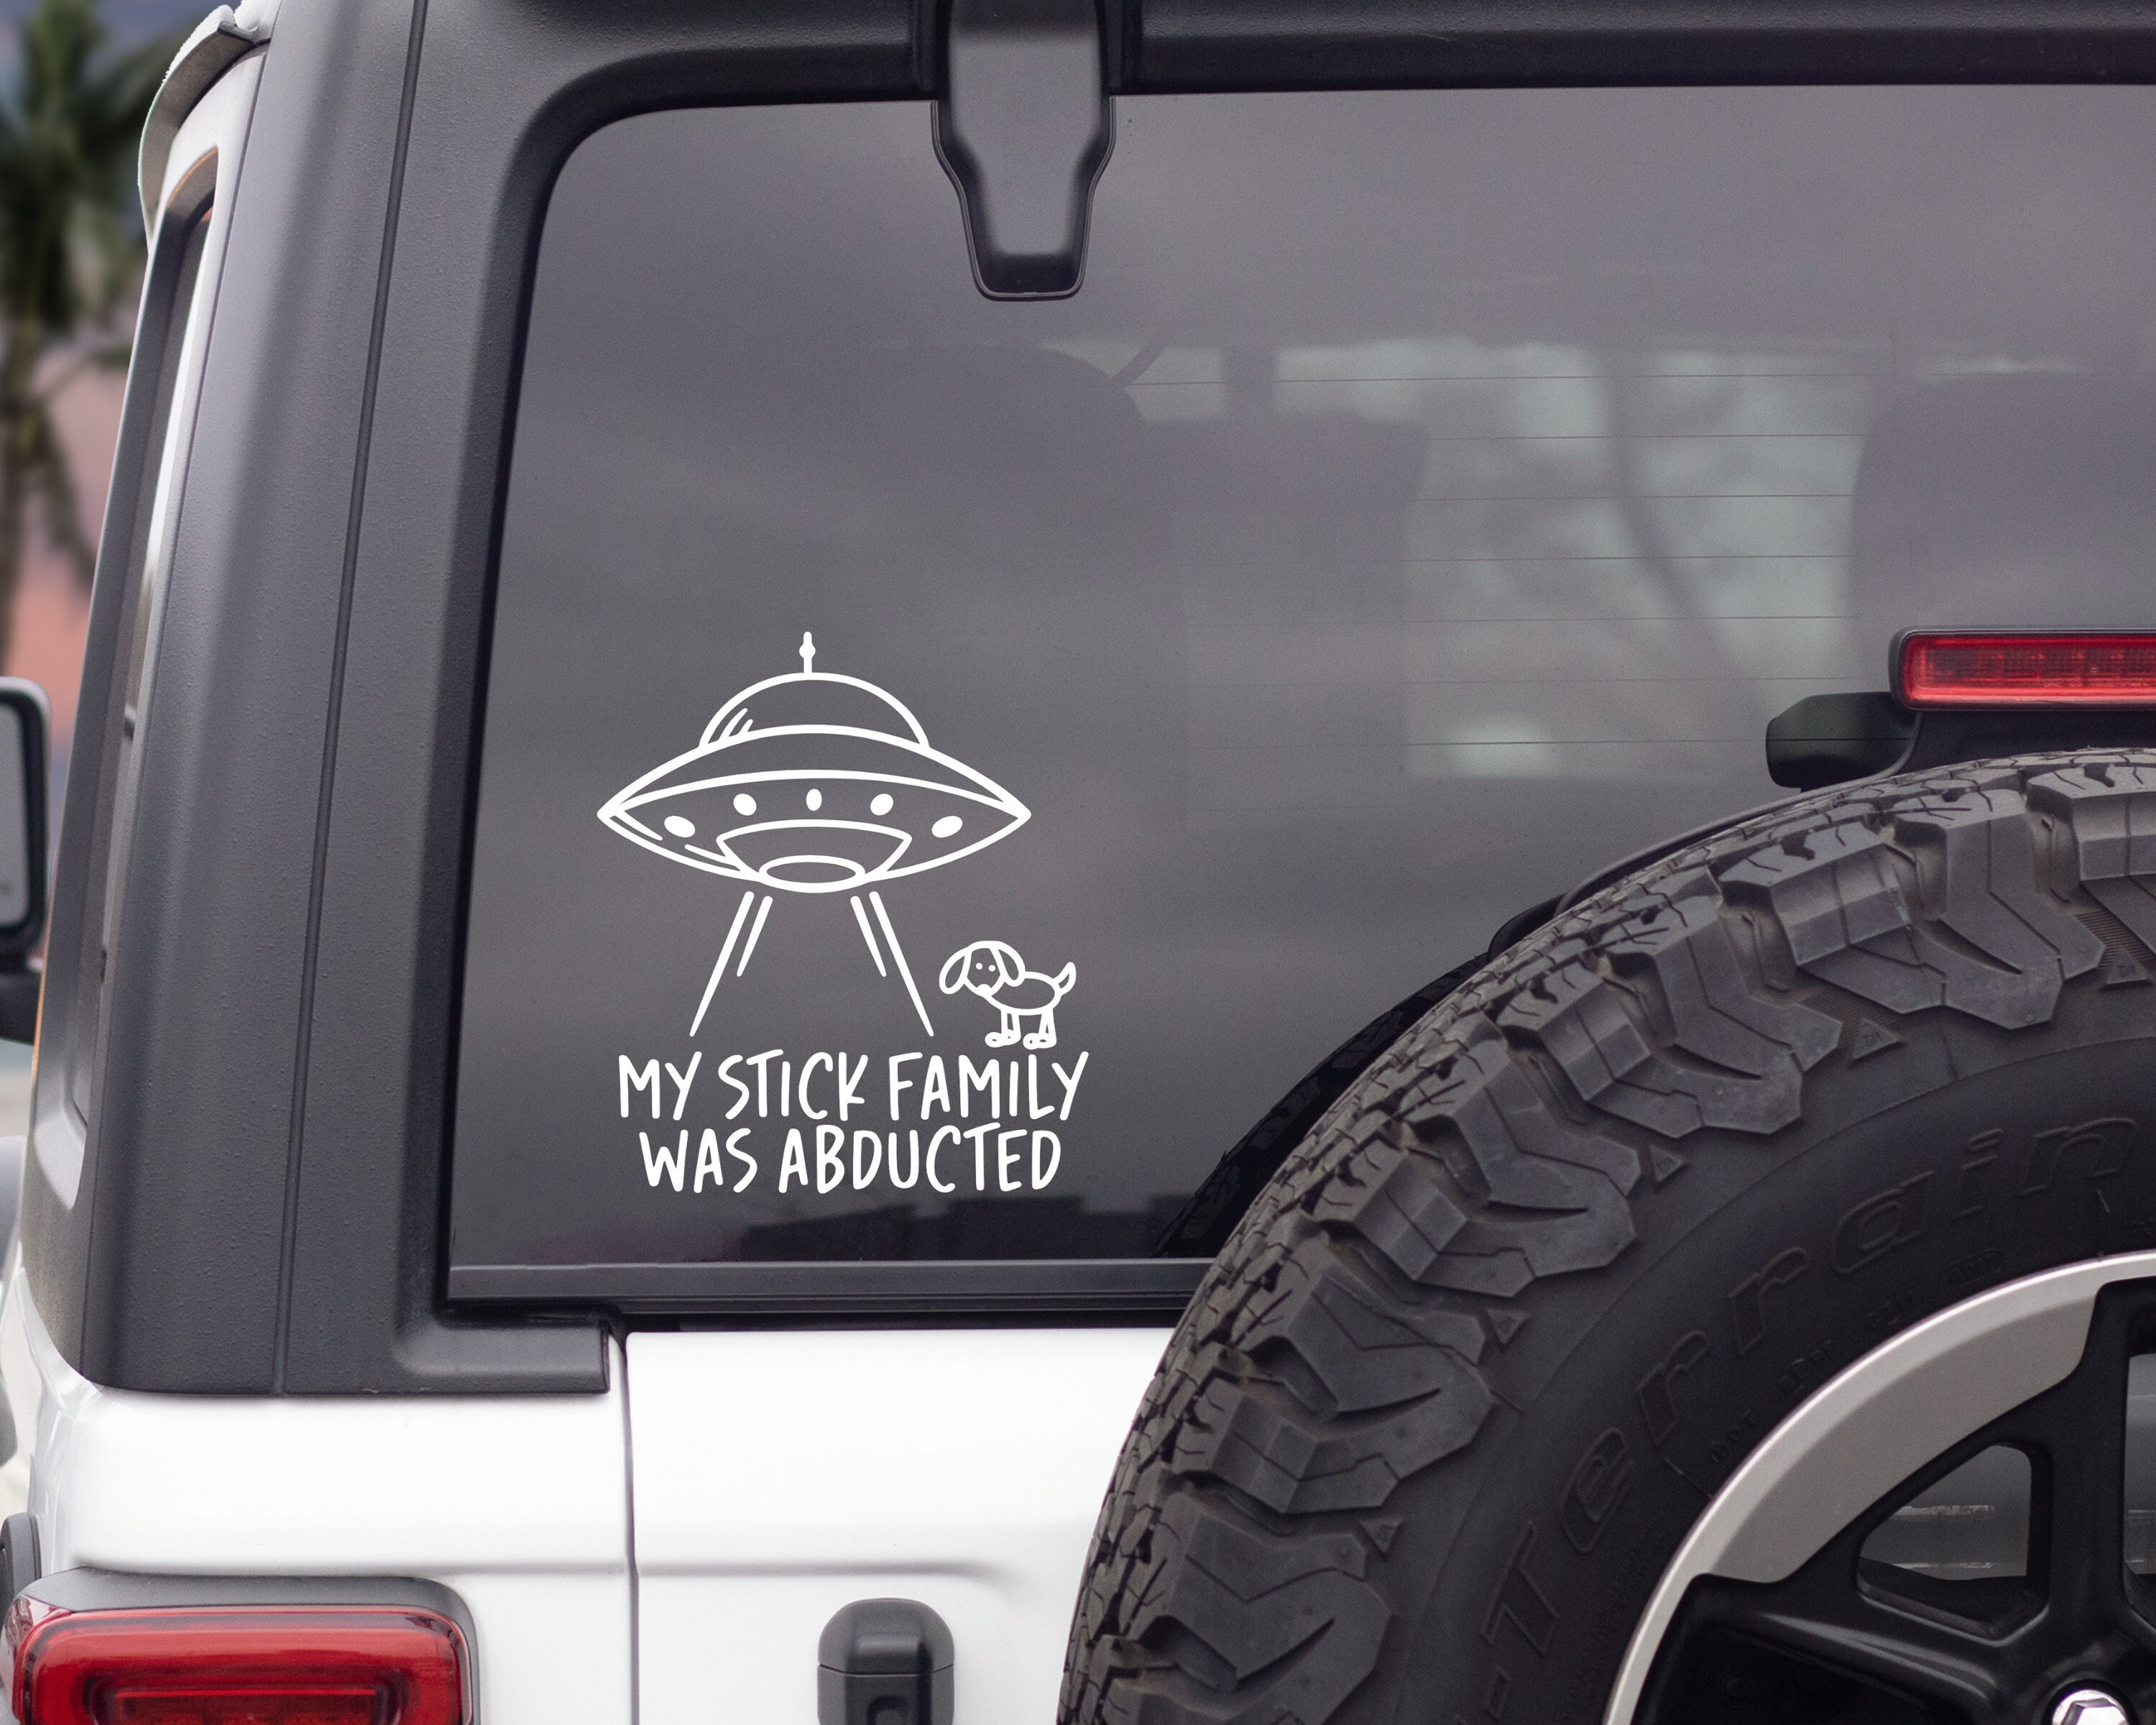 Making my family funny bumper decal sticker vinyl stick figure family car  truck window